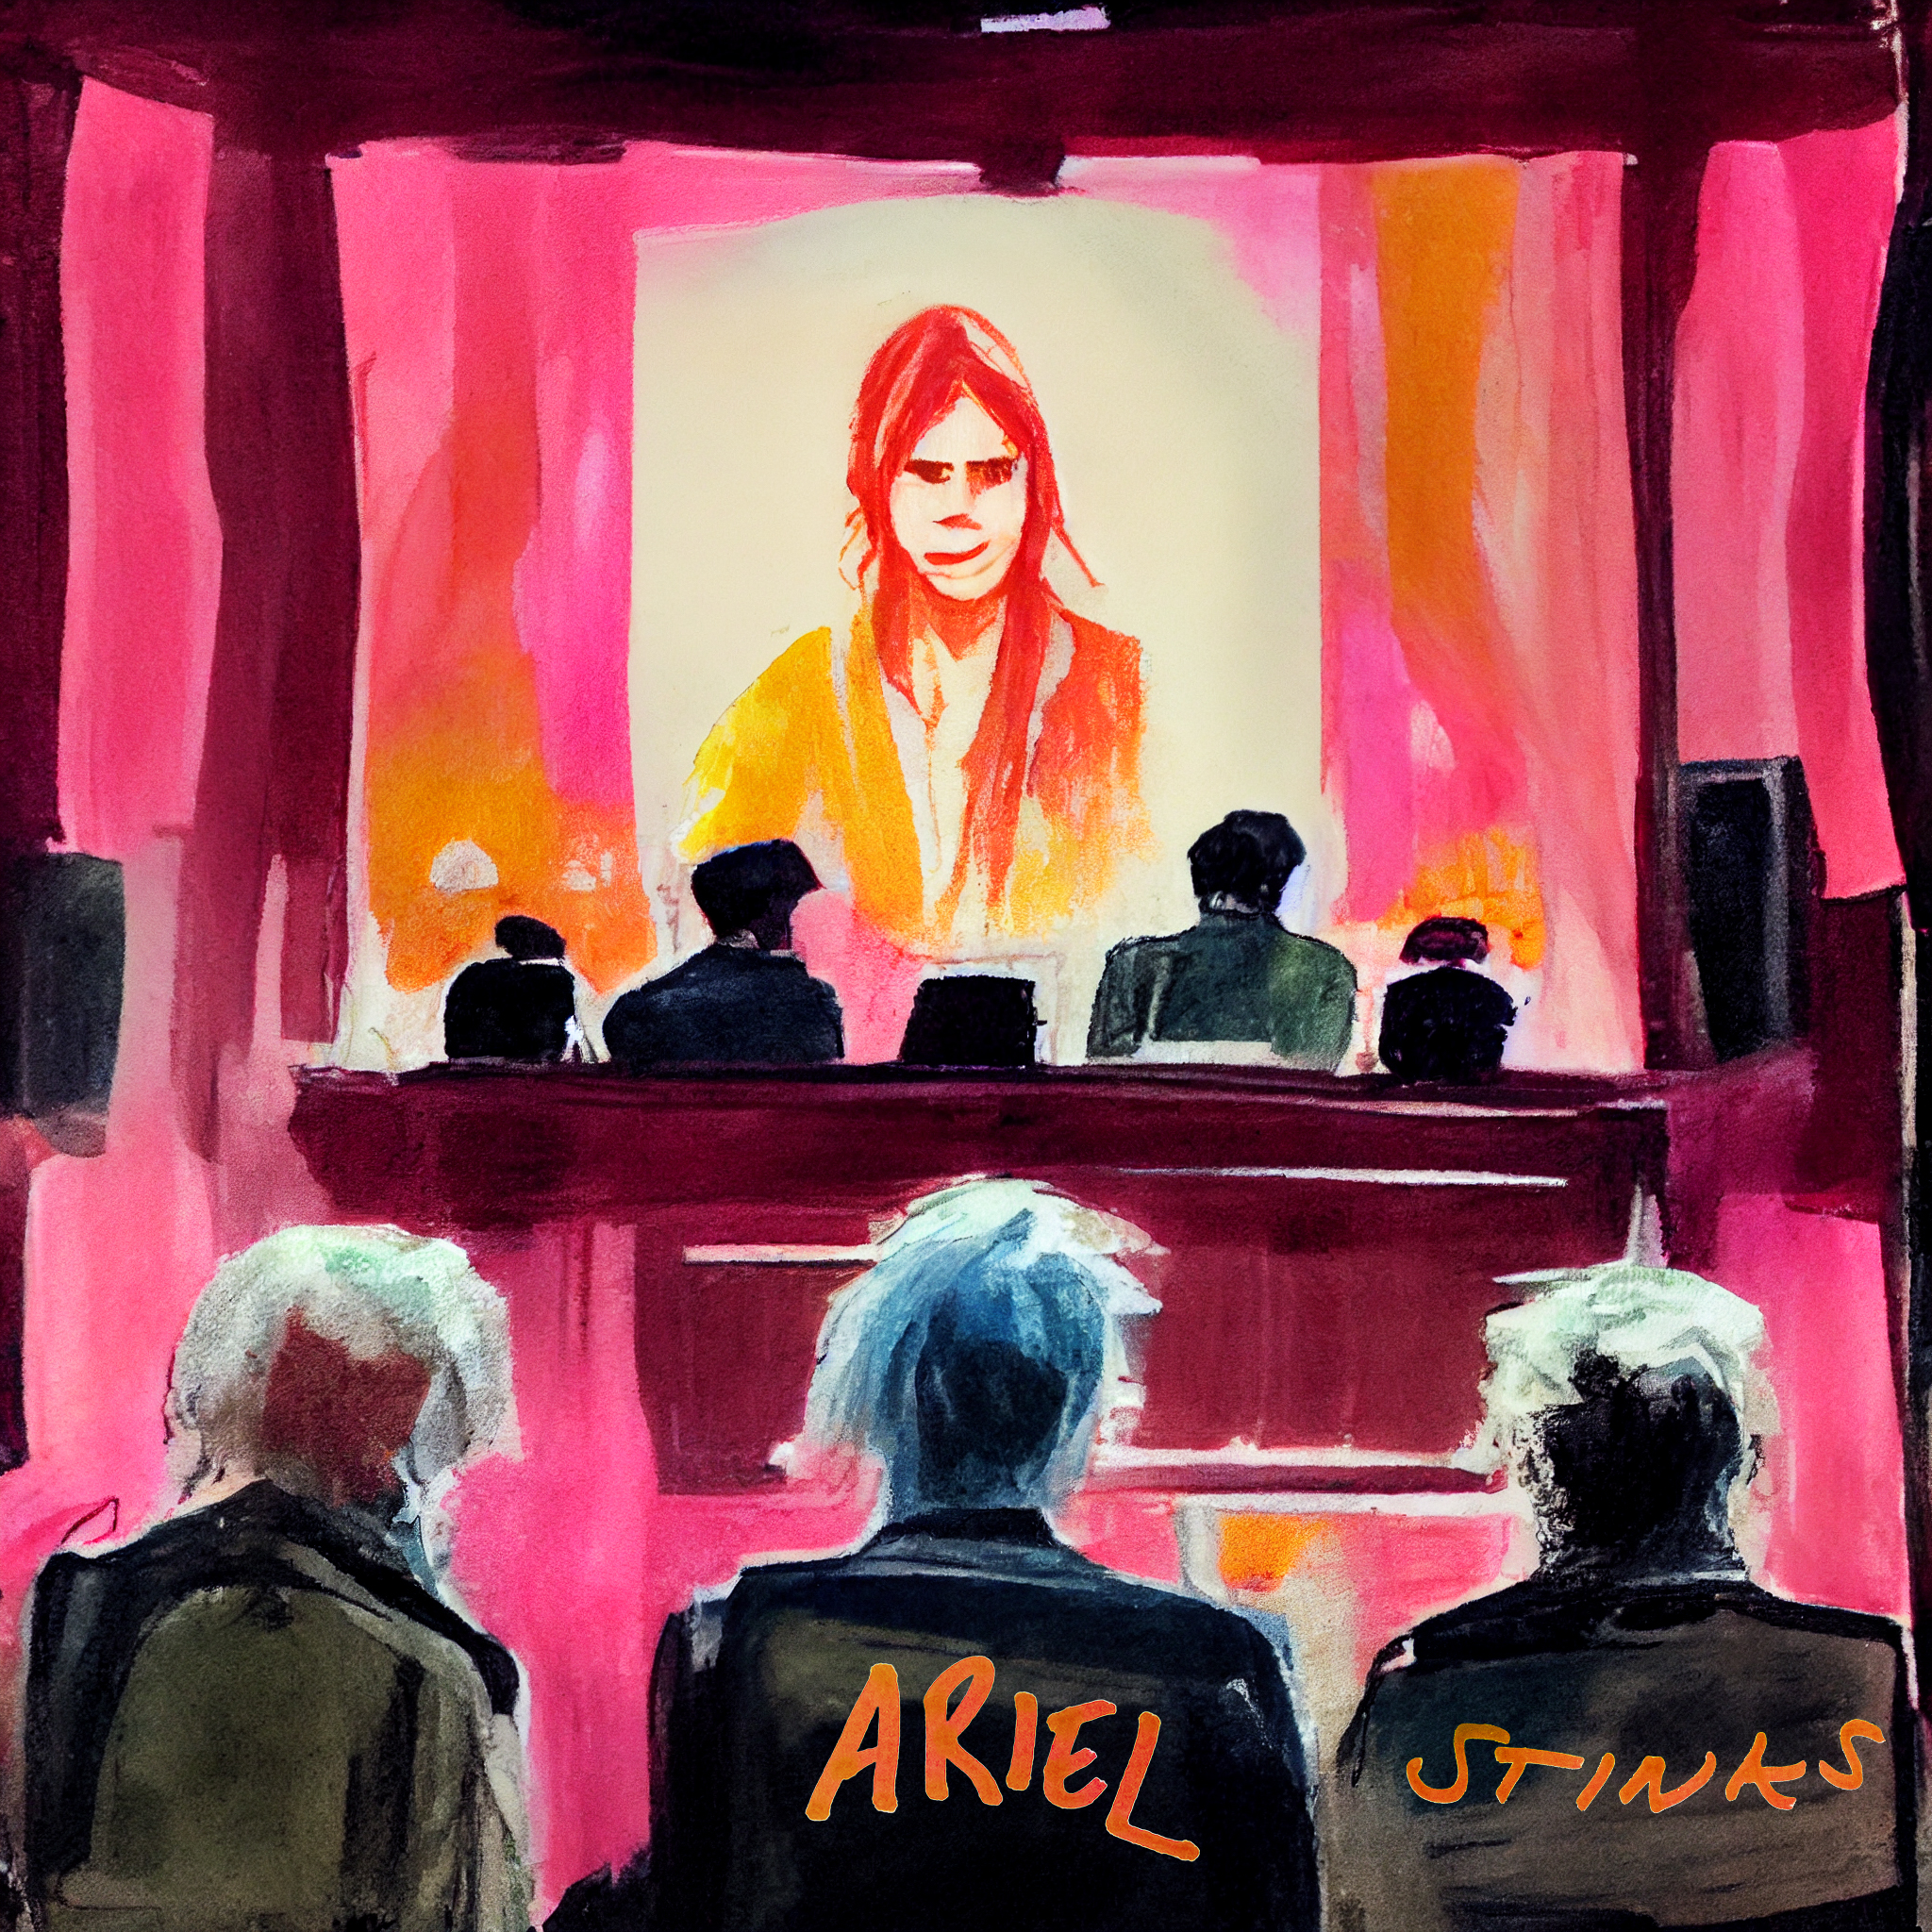 Ariel is Judged by Ariels